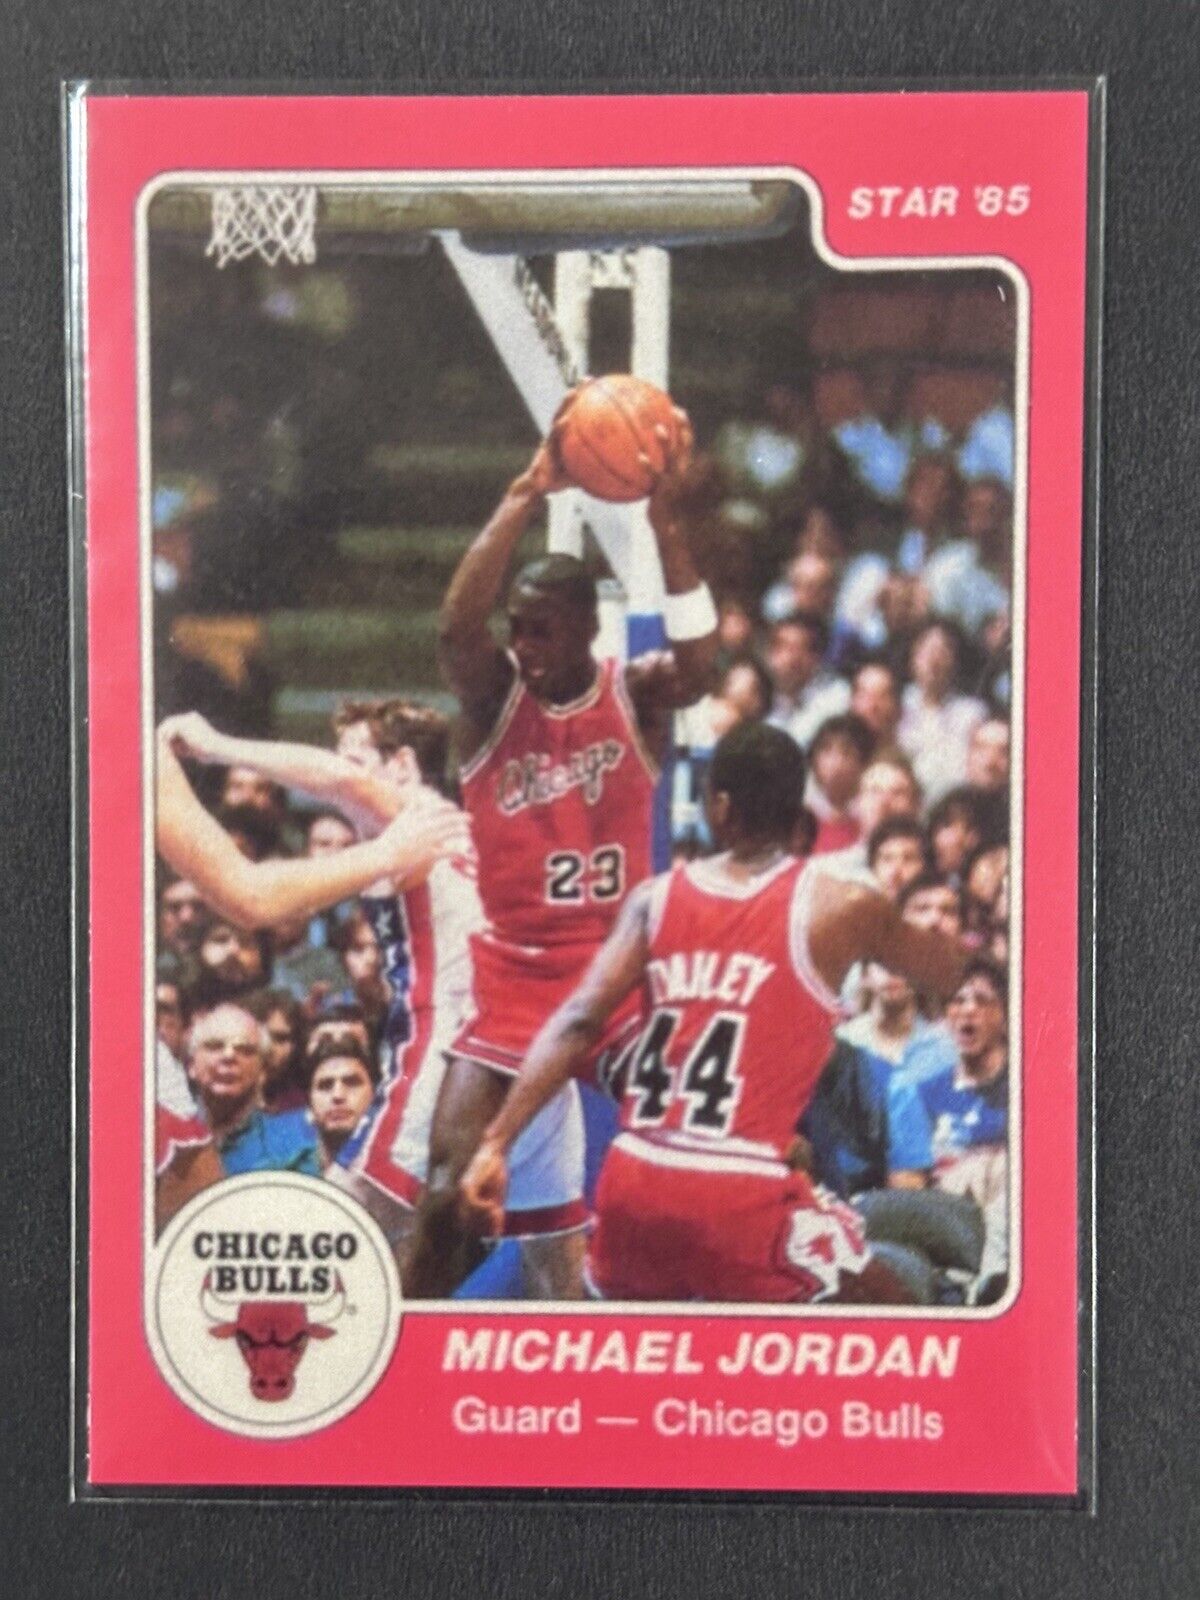 Michael Jordan Star ‘85 Reprint Novelty Card